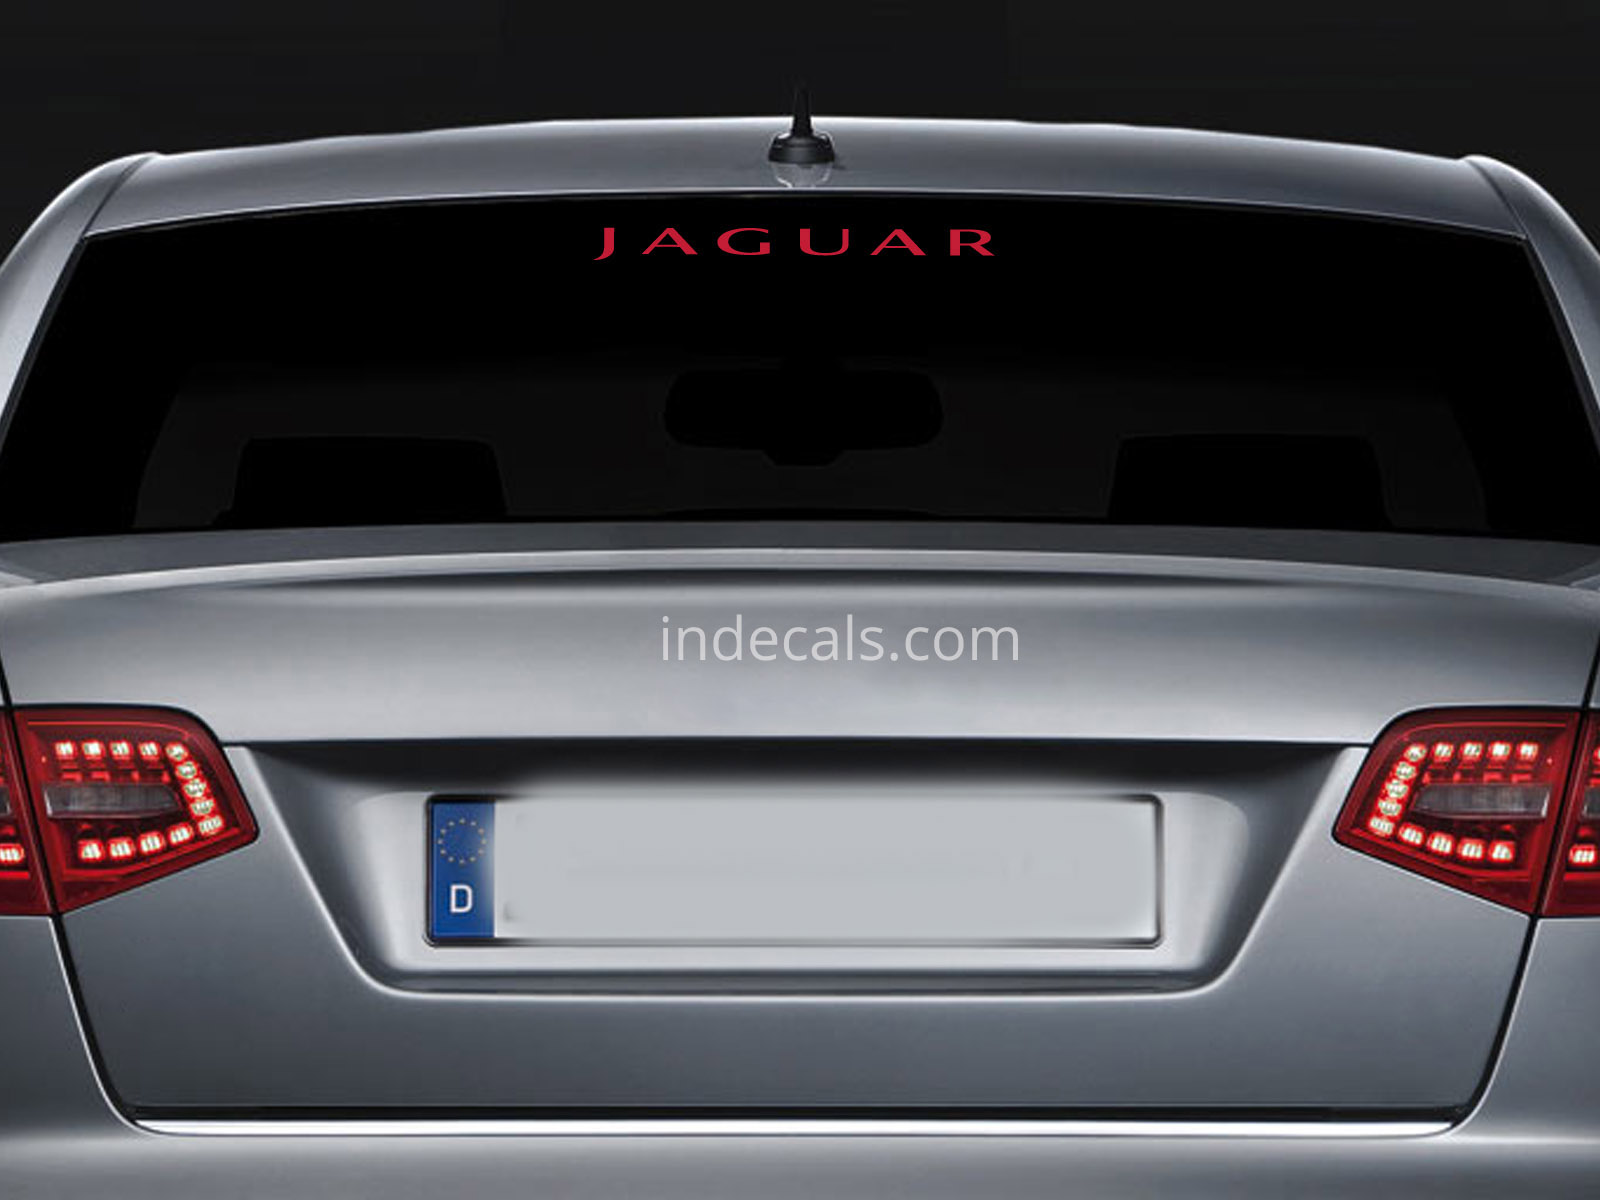 1 x Jaguar Sticker for Windshield or Back Window - Red